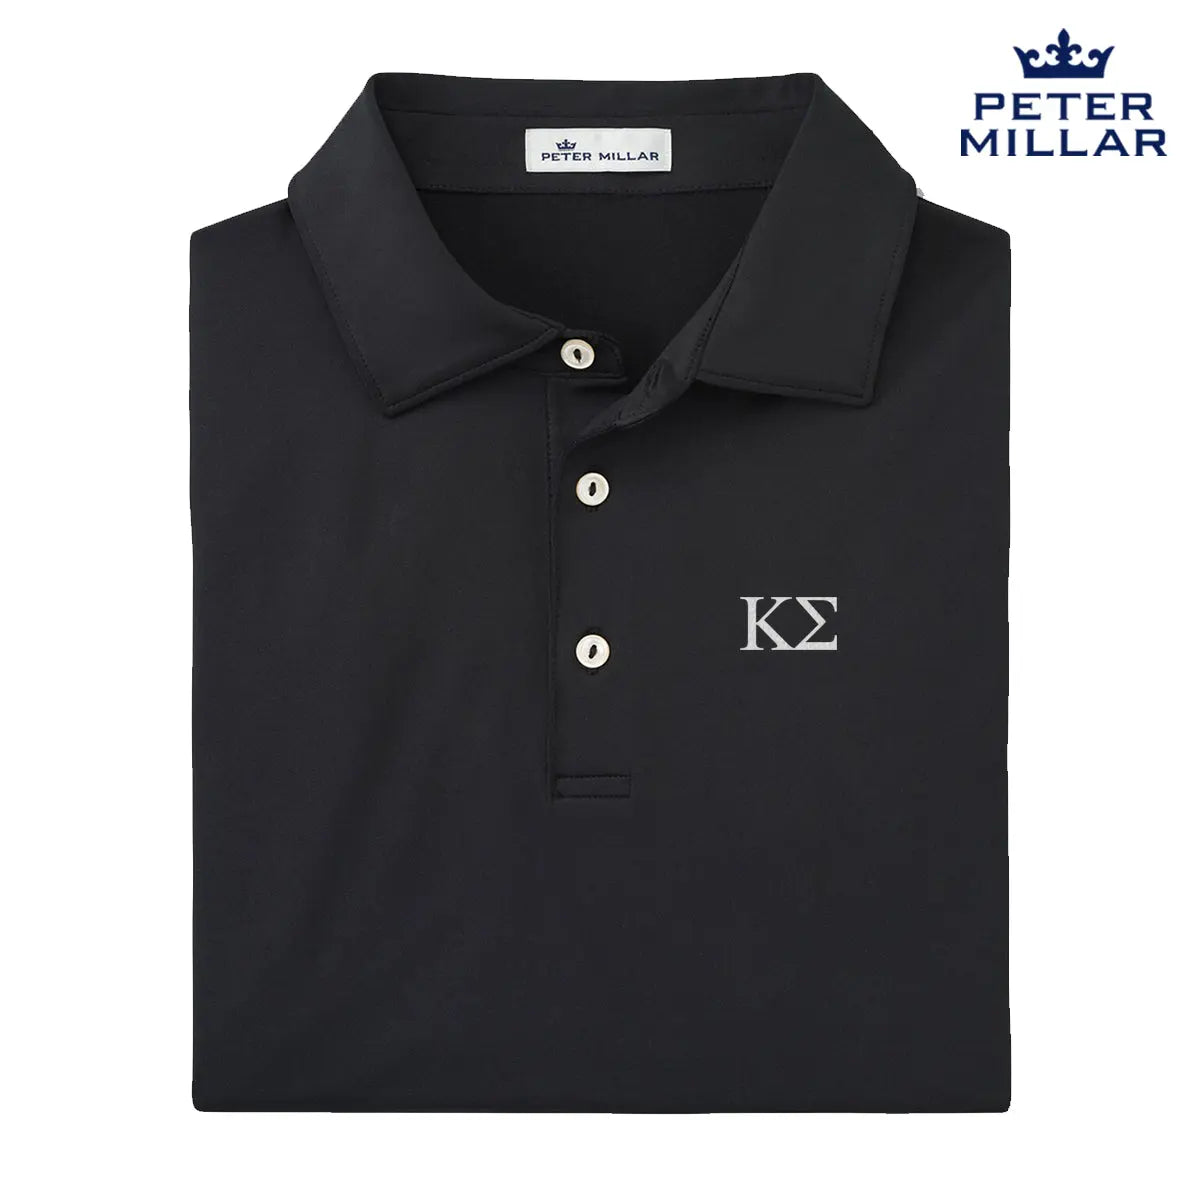 New! Kappa Sig Peter Millar Black Polo With Greek Letters Kappa Sigma